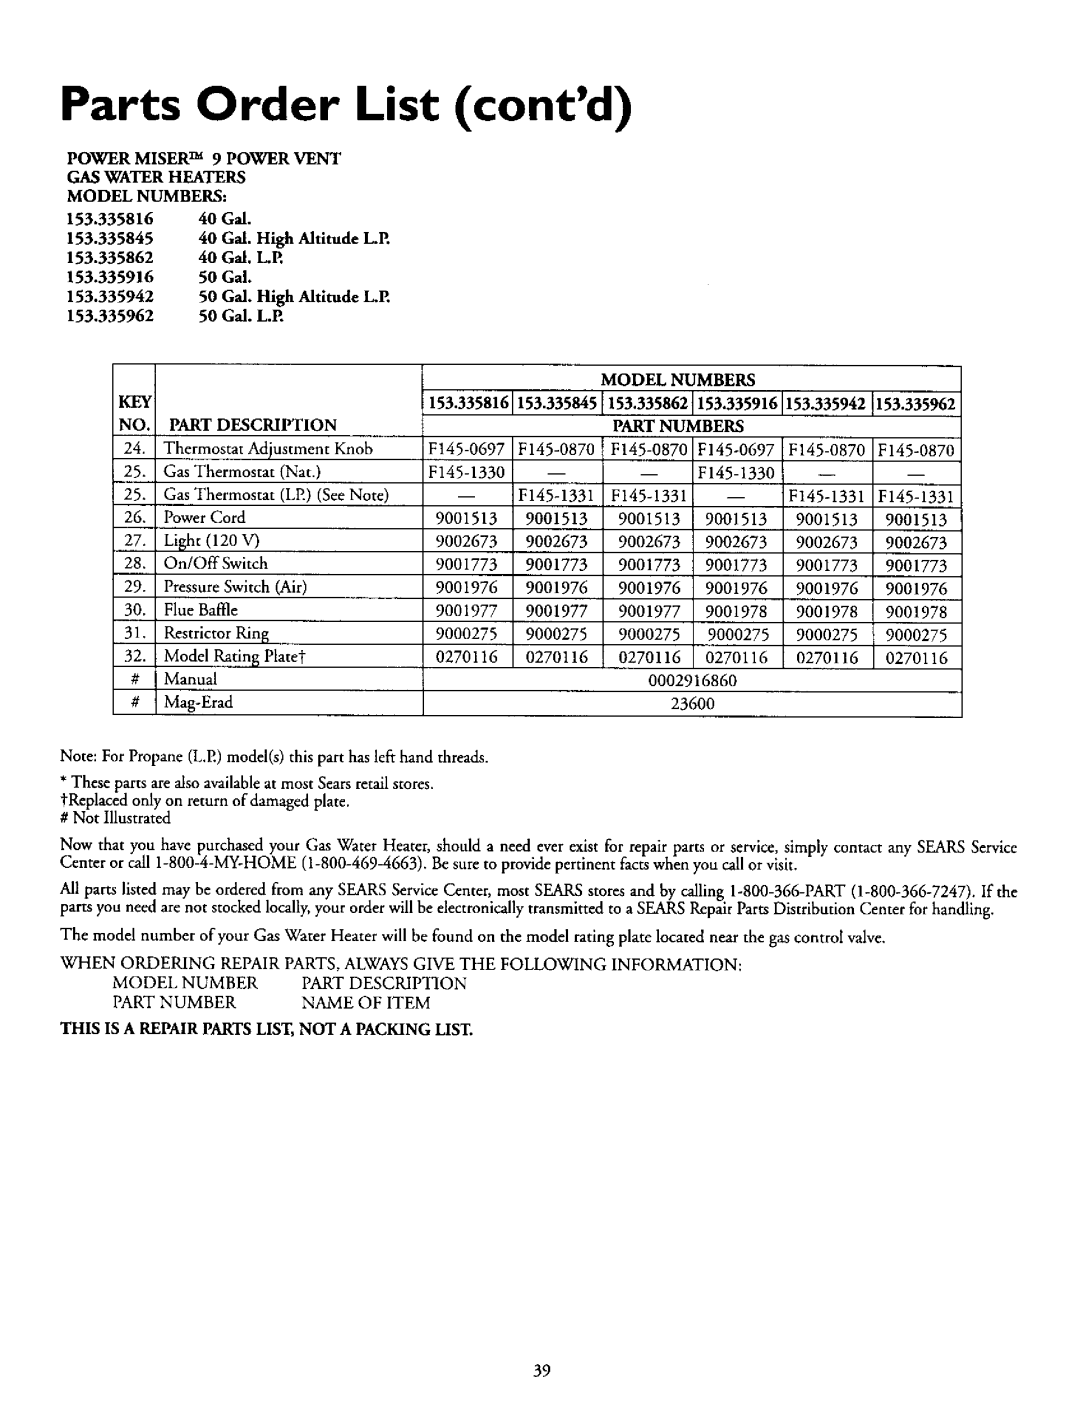 Kenmore 153.335916, 153.335942 Parts Order List contd, POWER MISER TM 9 POWER VENT GAS WATER HEATERS, Model Numbers 